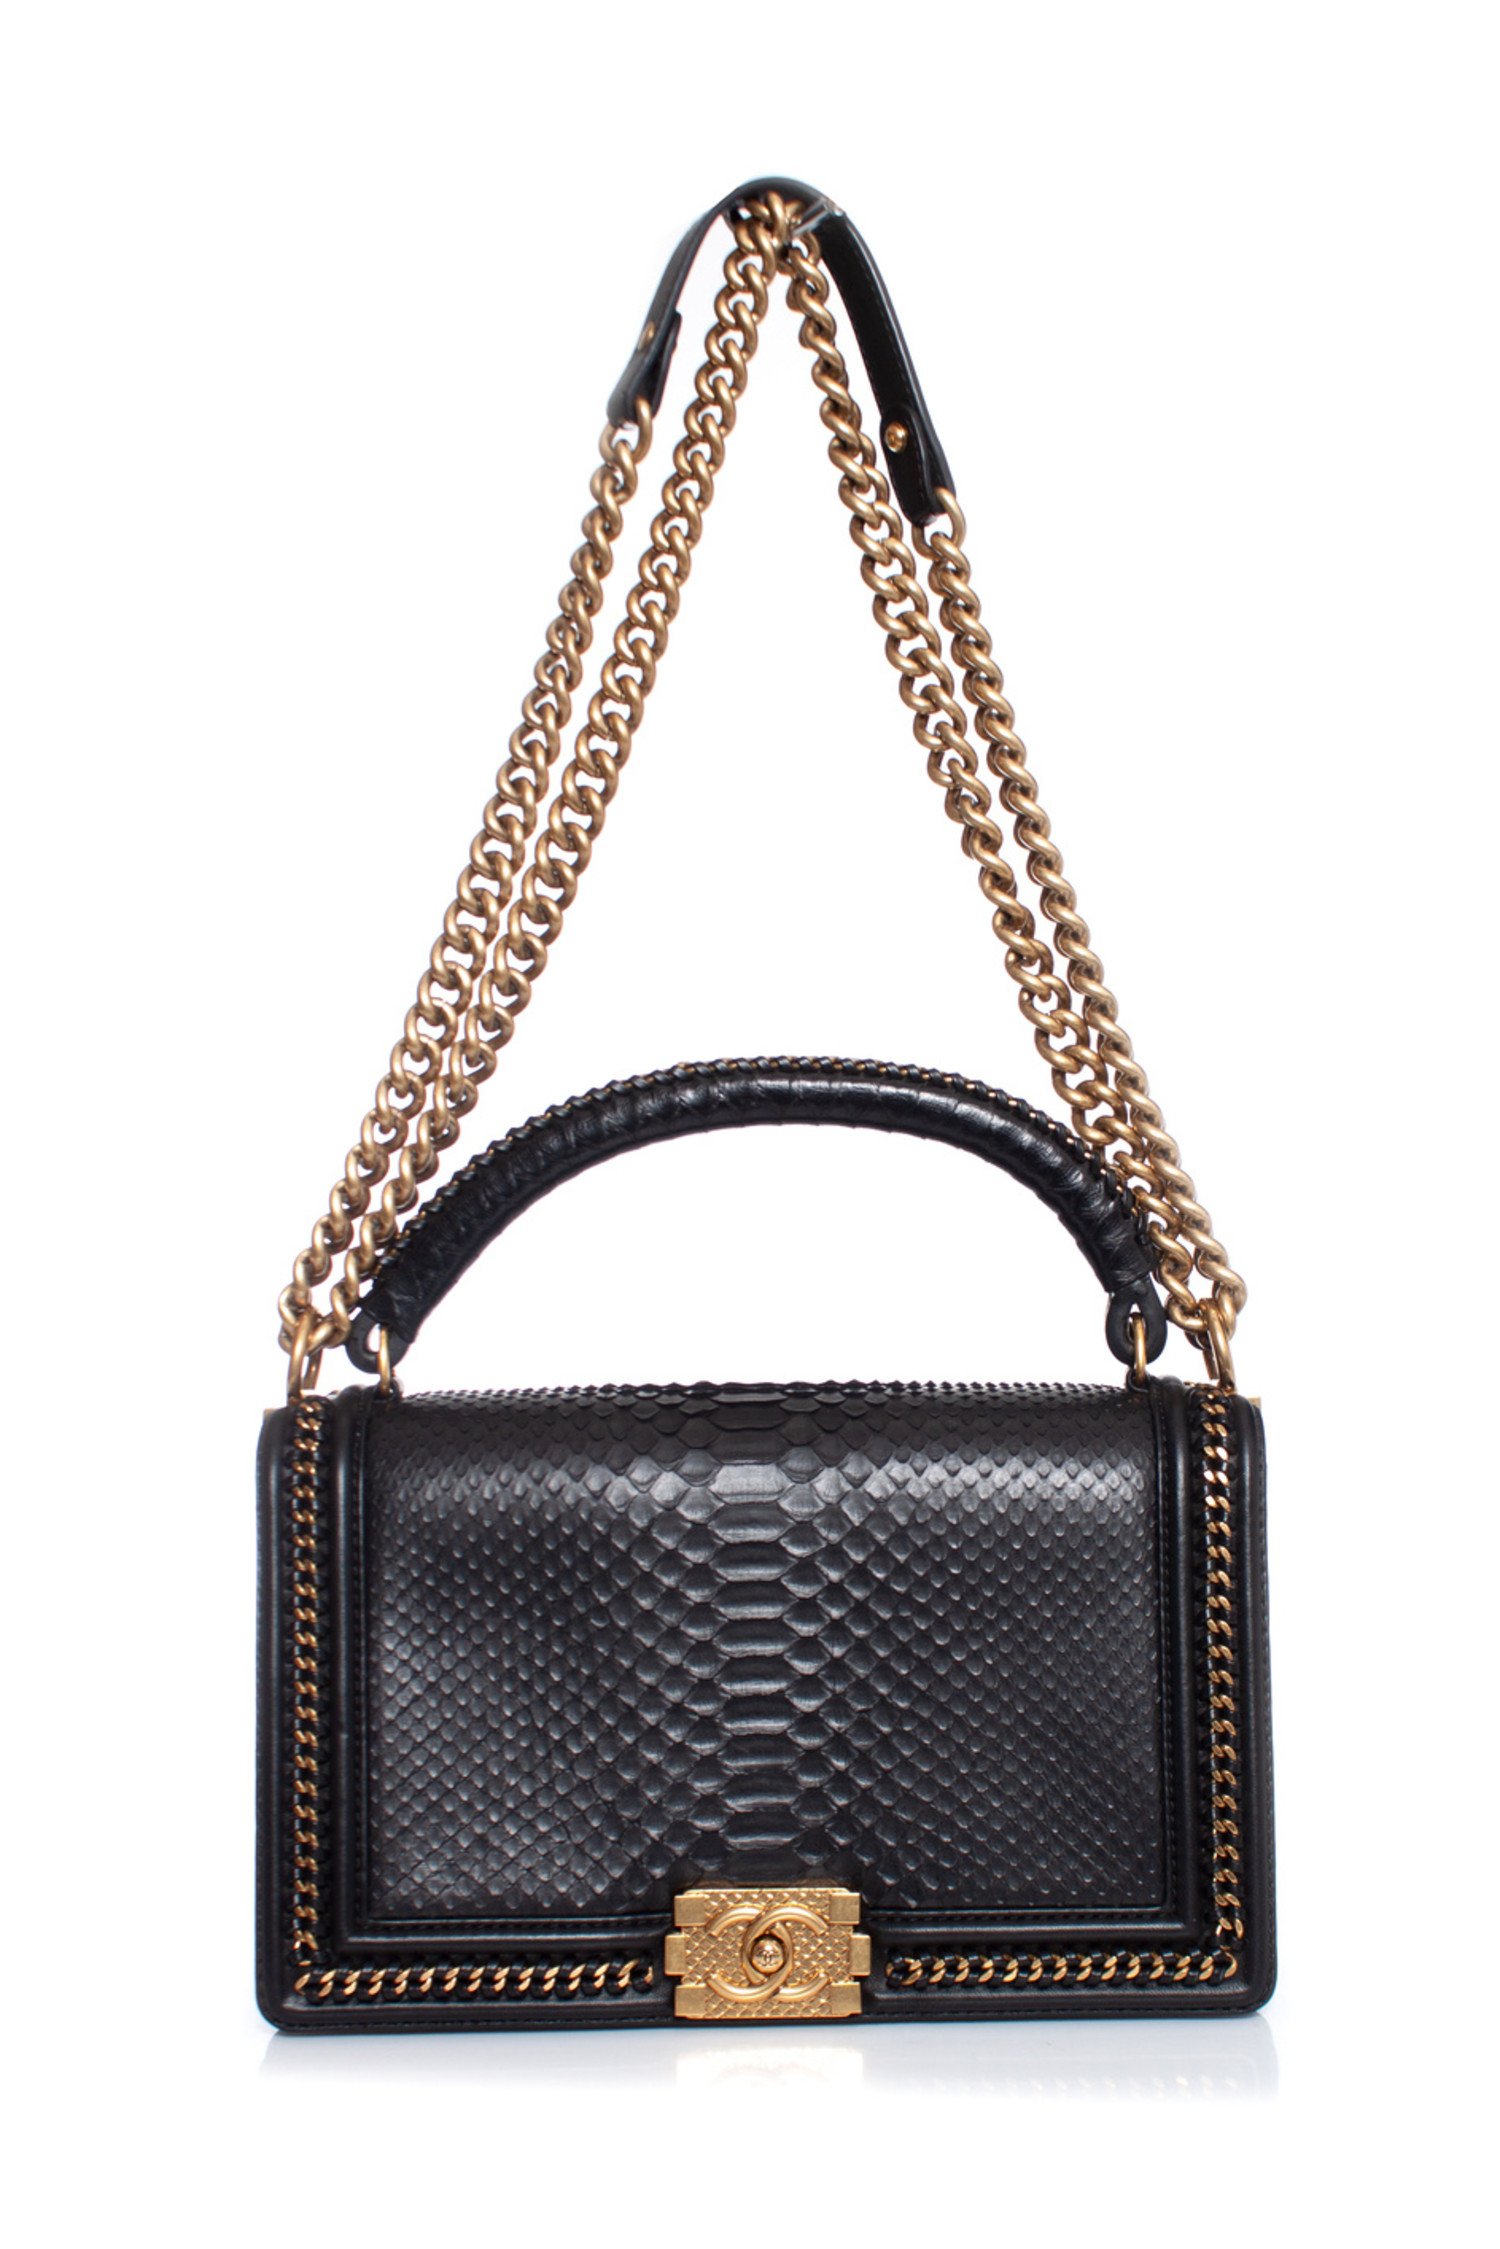 Buy PreOwned Chanel Boy Flap Crossbody Bag Medium Black Leather